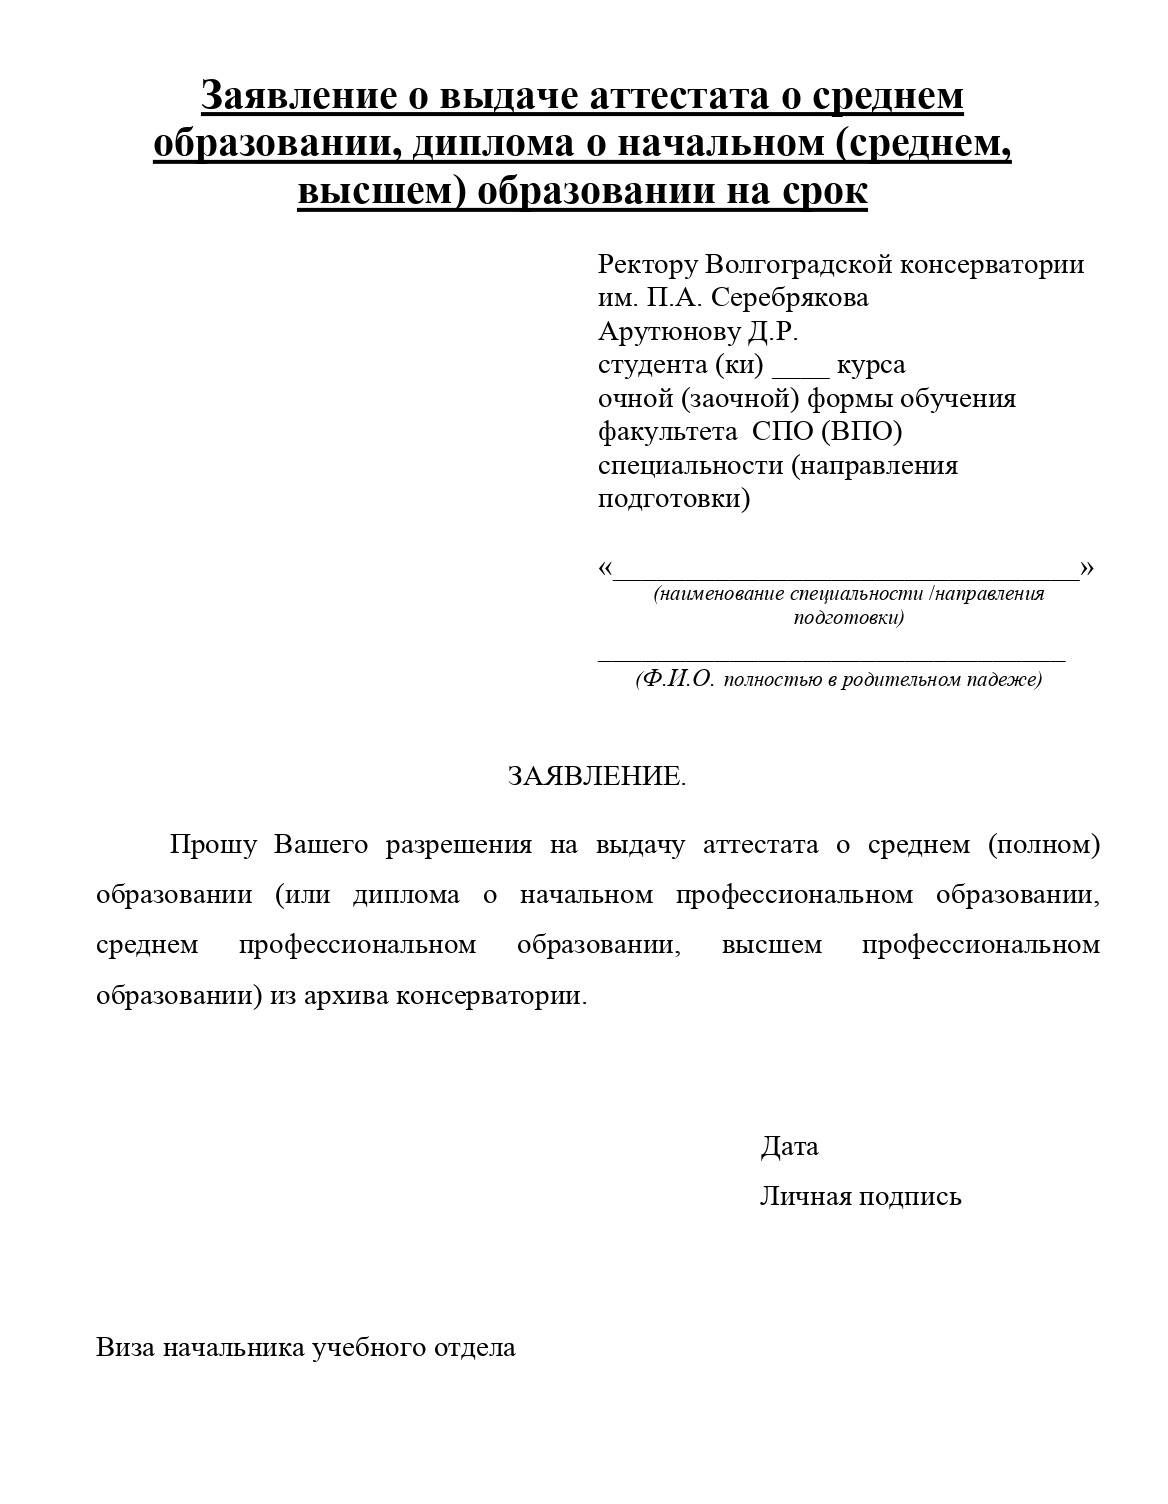 Образец заявления на выдачу аттестата в Волгоградской консерватории